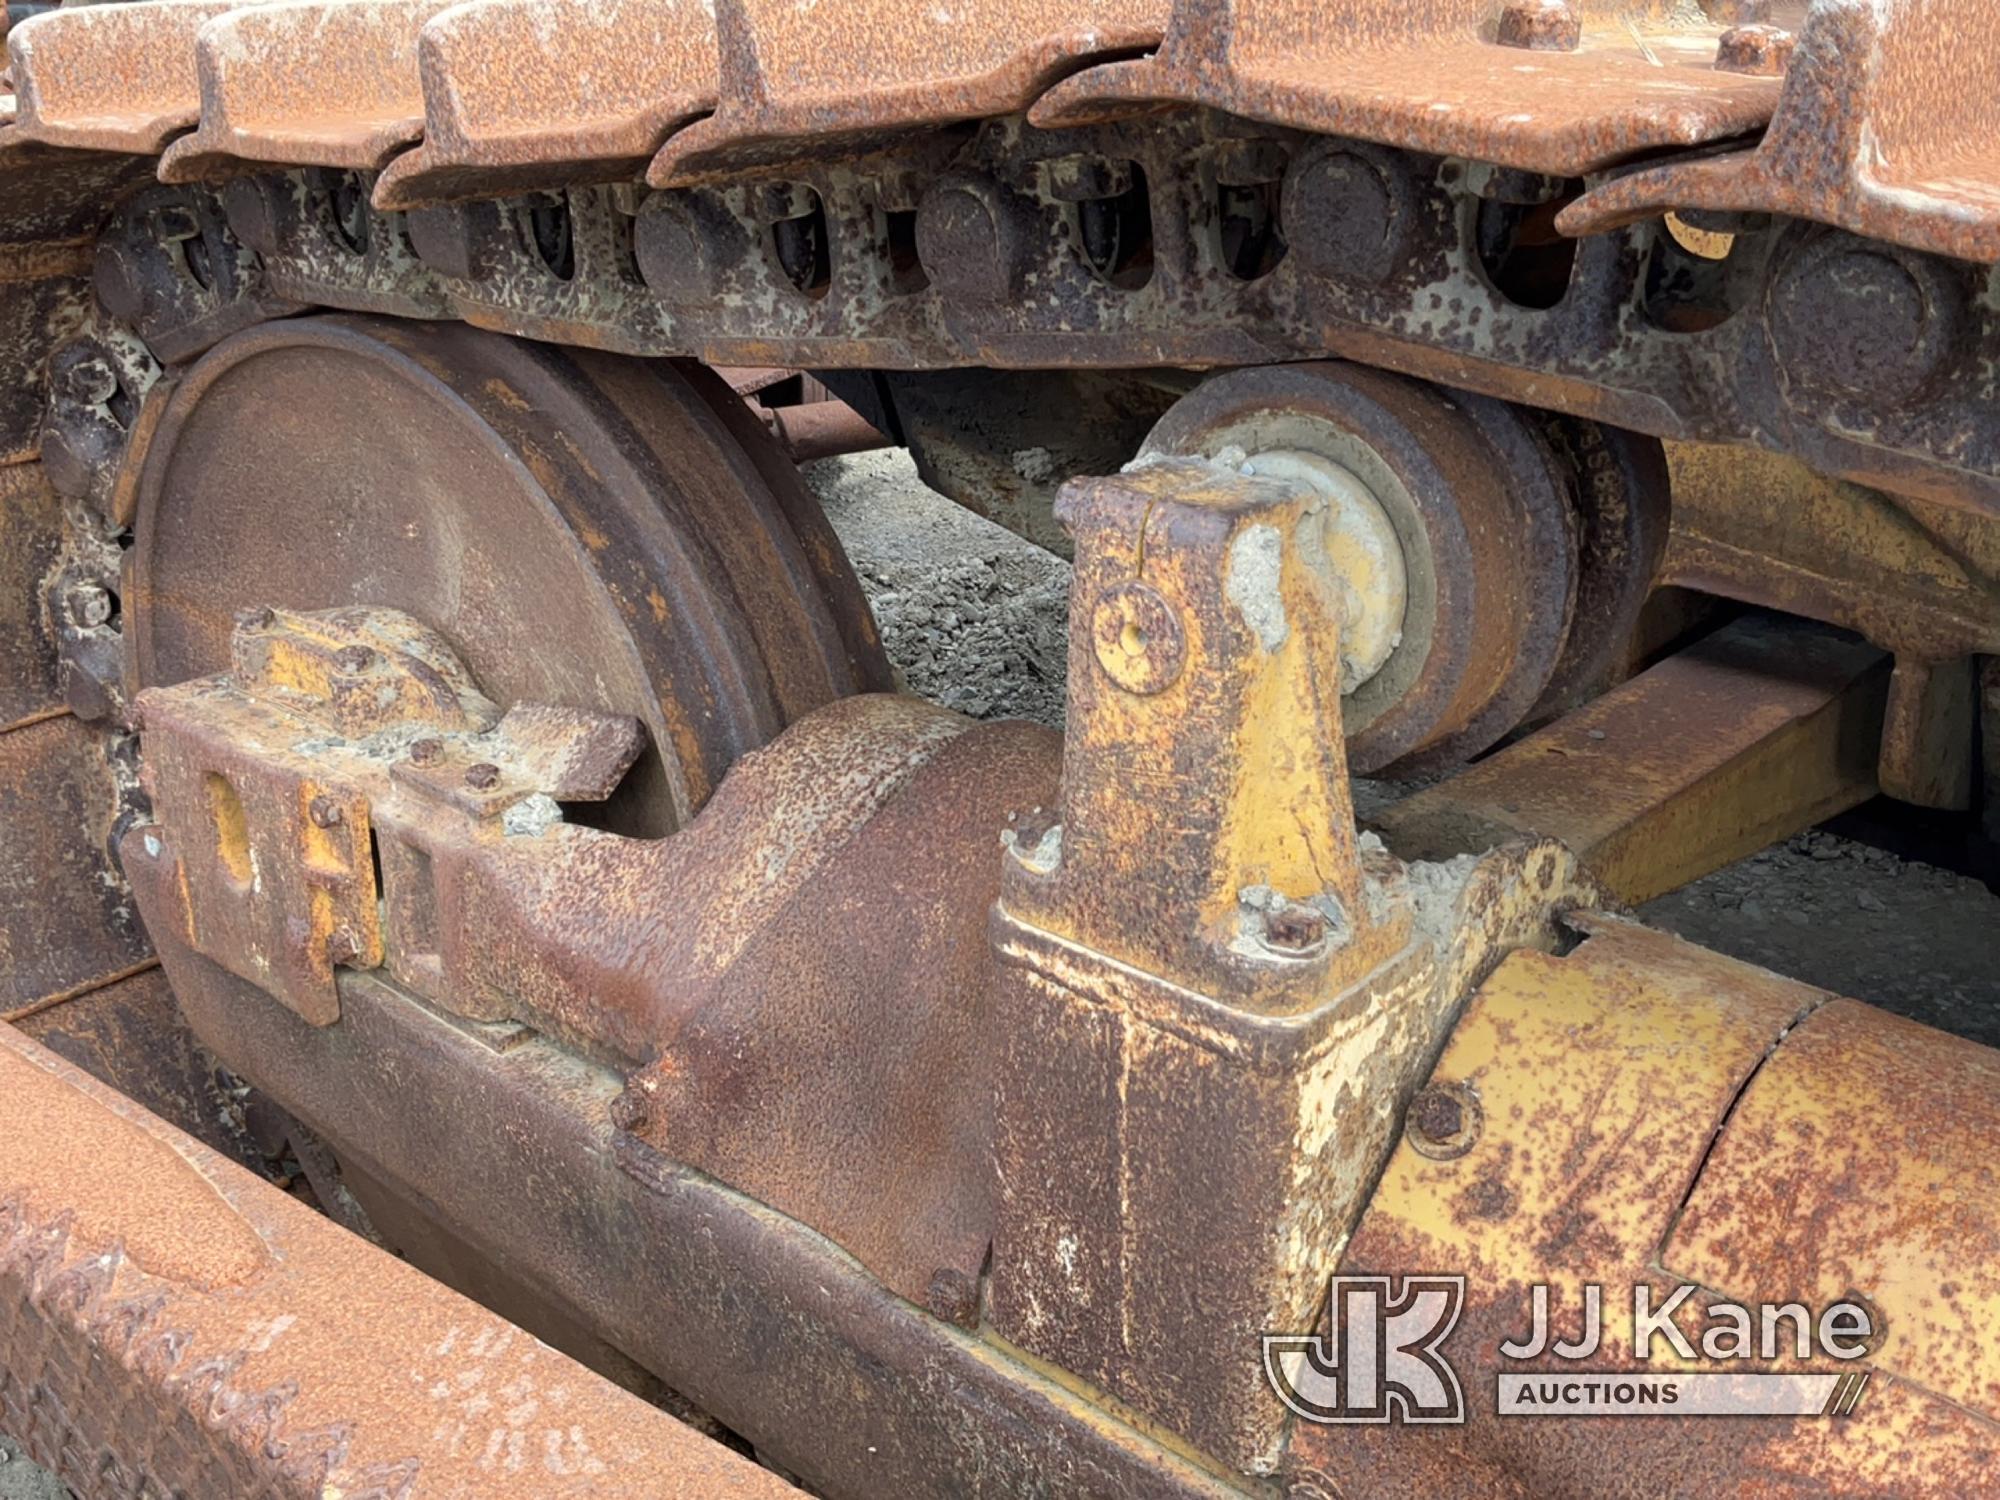 (Eureka, CA) 1972 Caterpillar D6C Crawler Tractor Runs & Operates) (True Hours Unknown